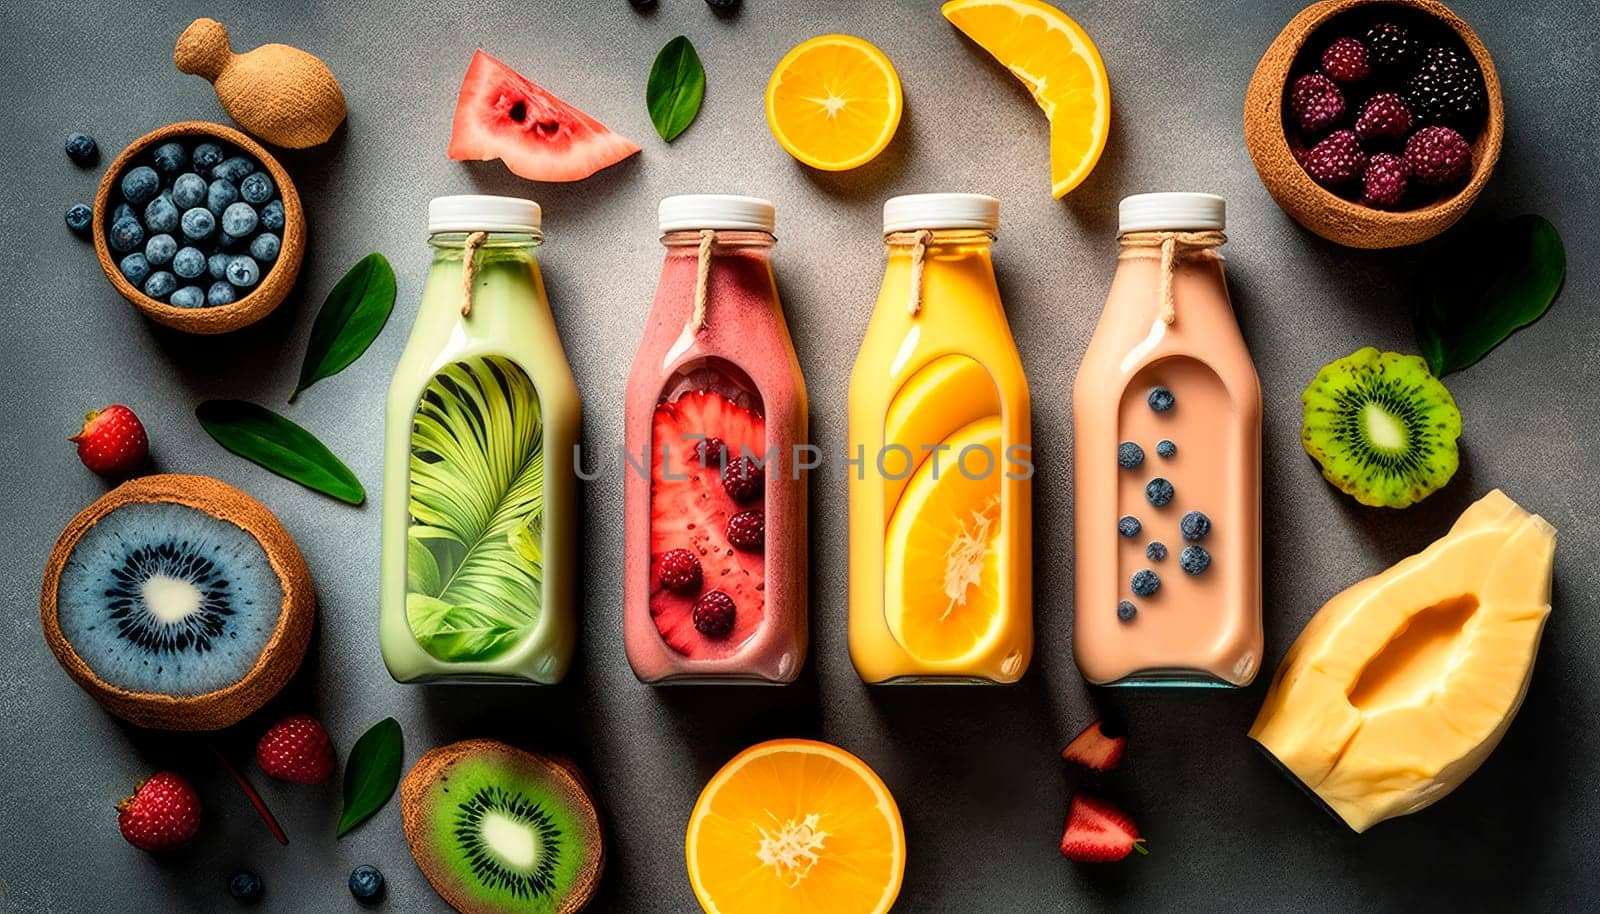 Fruit smoothies in bottles with various ingredients, top view. by yanadjana